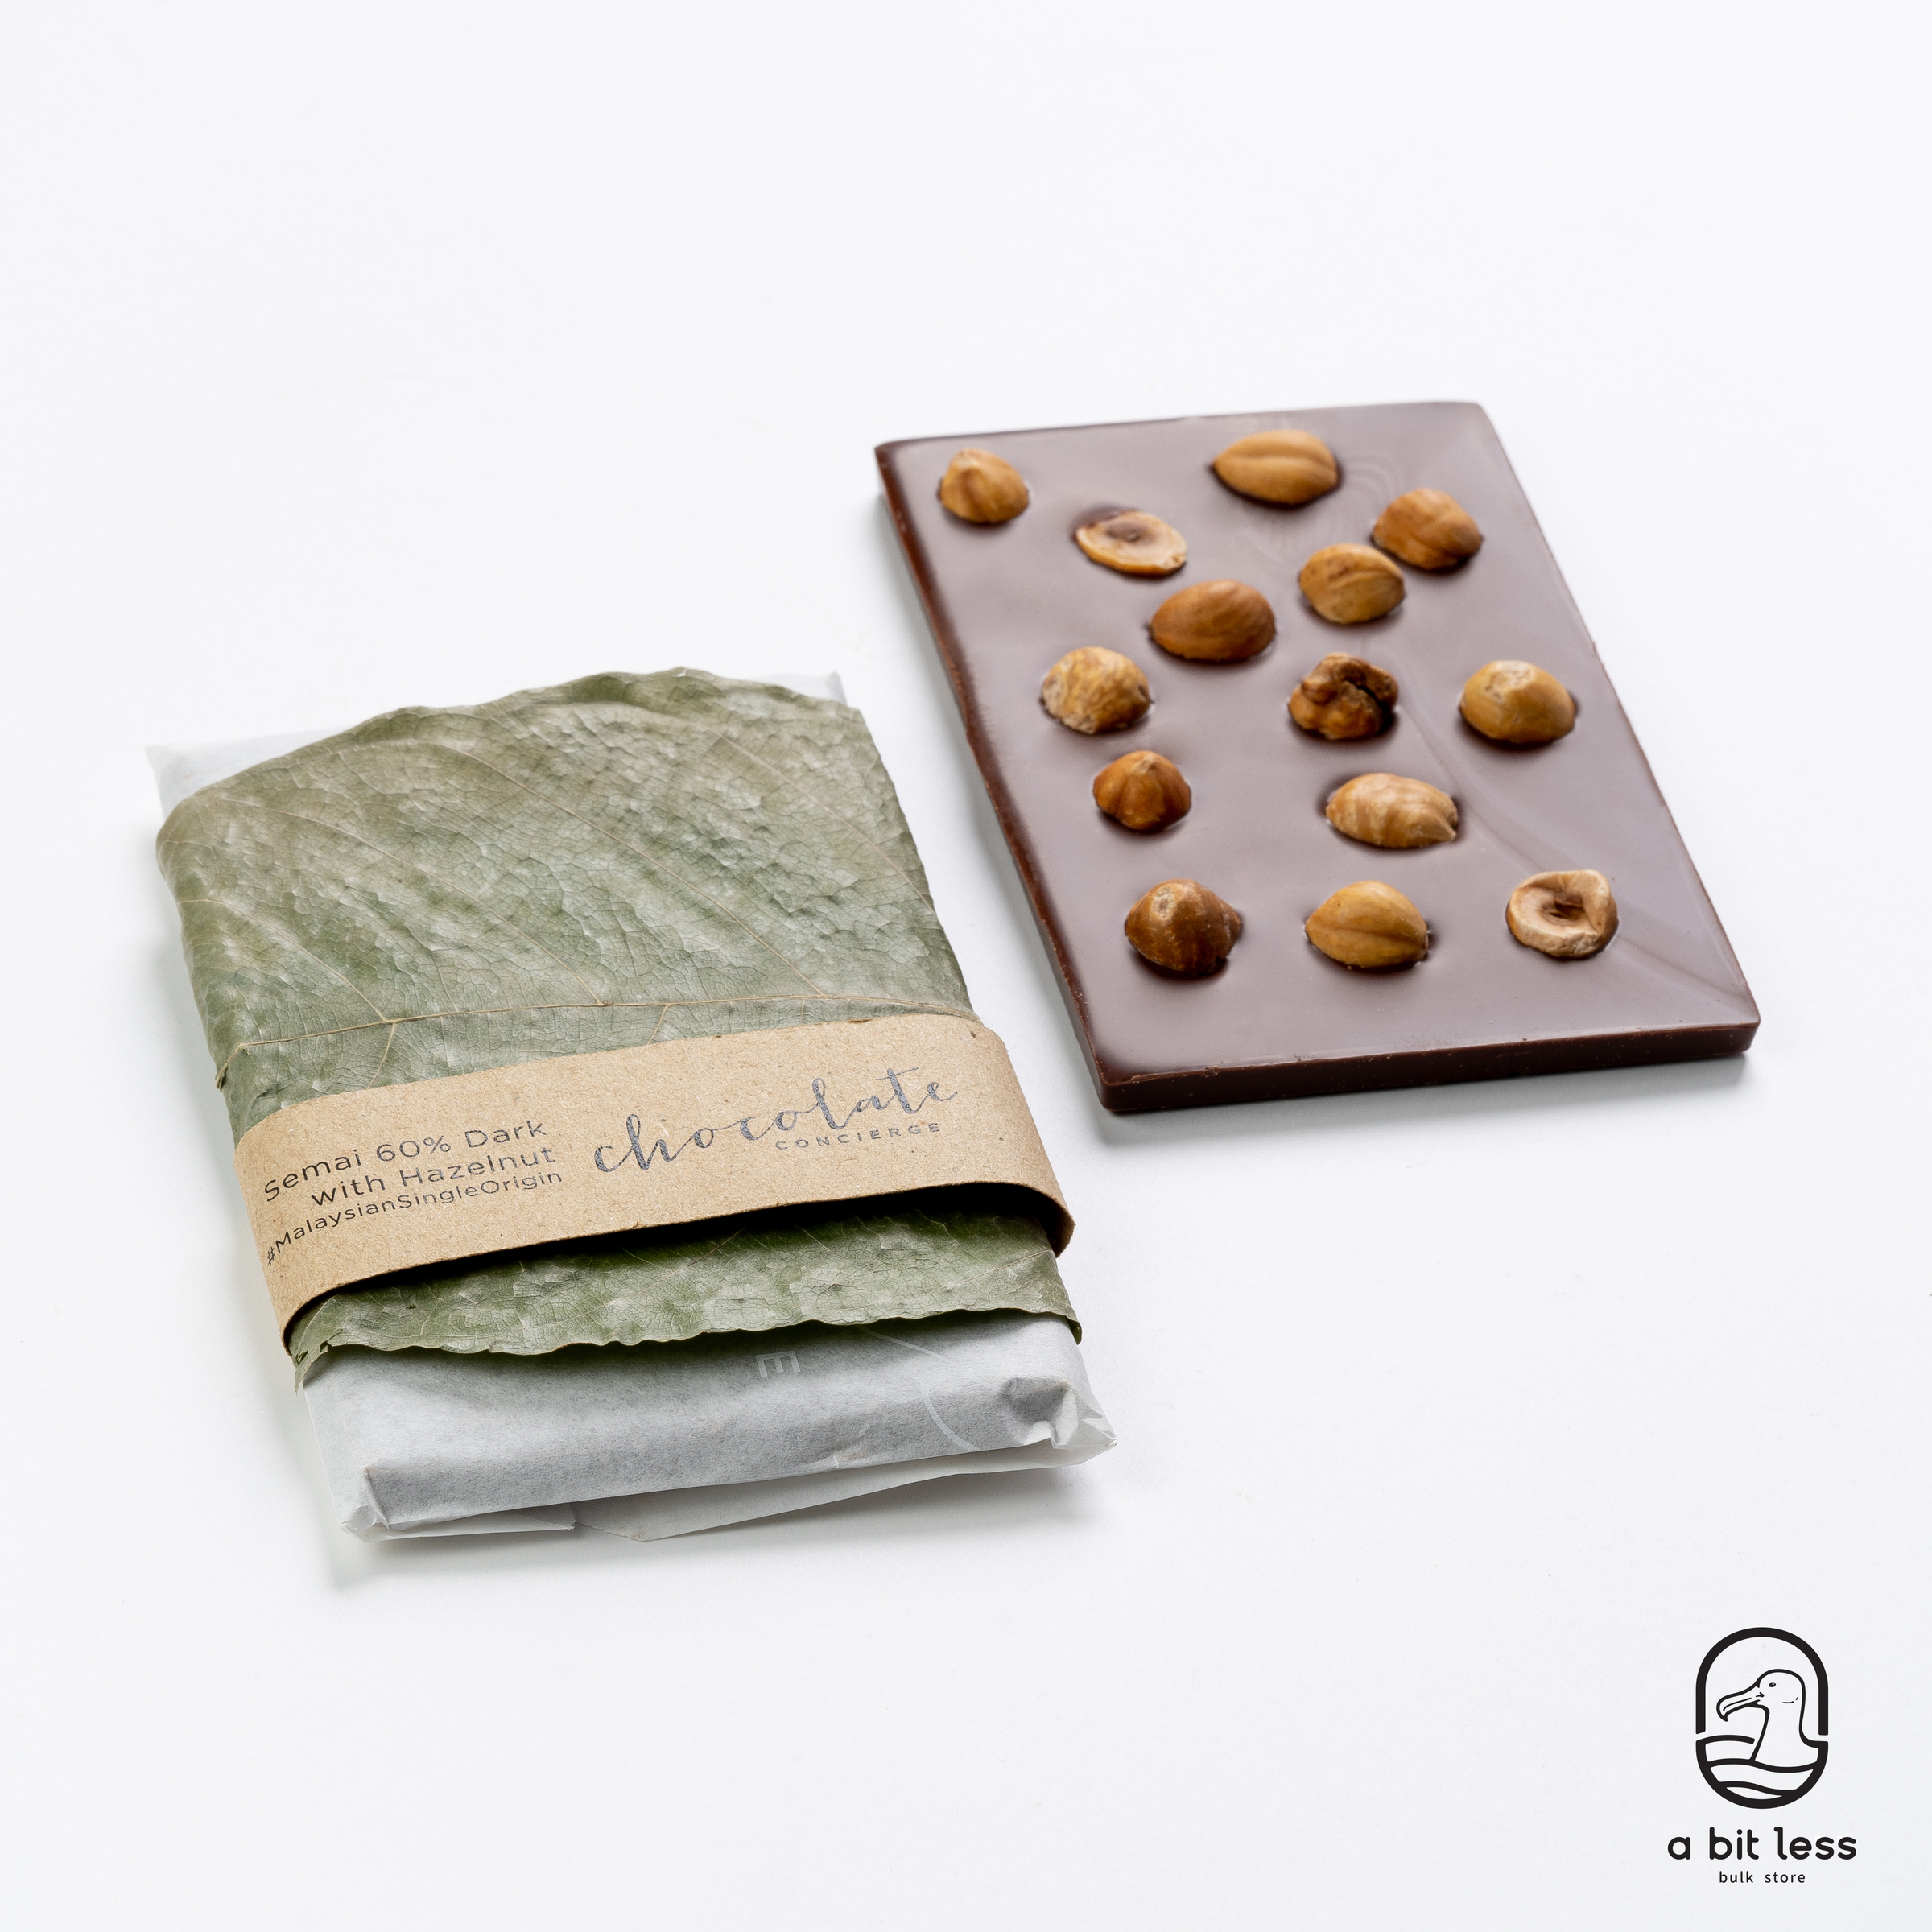 AbitLESS-27-Temuan 60� Dark Chocolate with Hazelnut.jpg